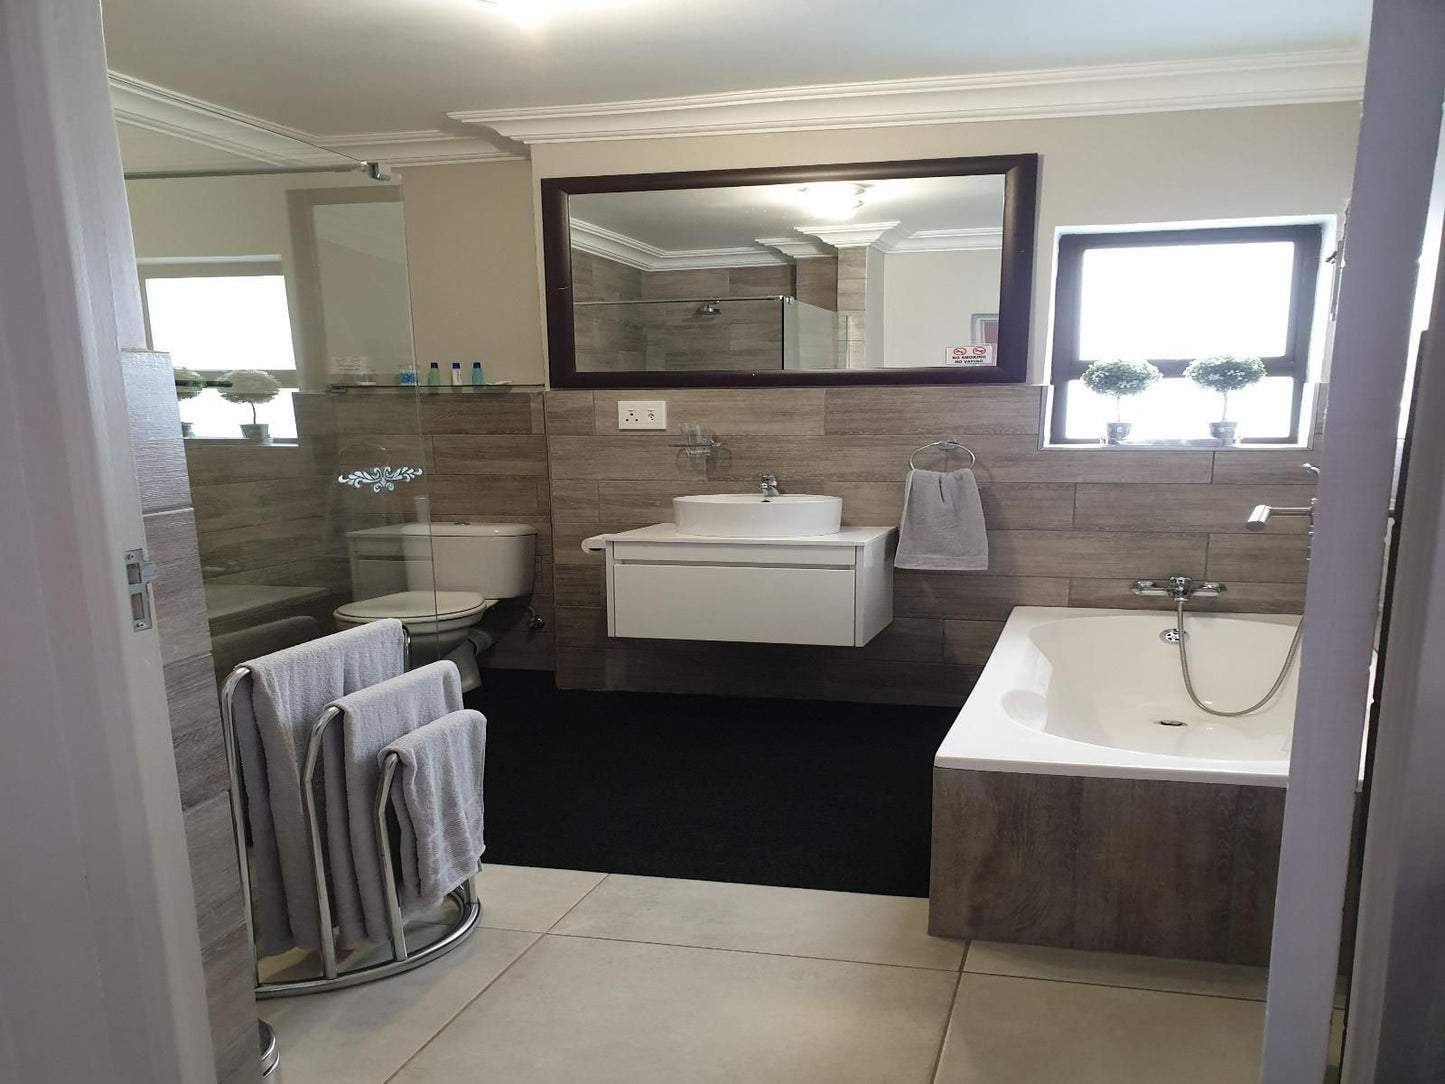 House Mulberry Luxury Accommodation Moreleta Park Pretoria Tshwane Gauteng South Africa Unsaturated, Bathroom